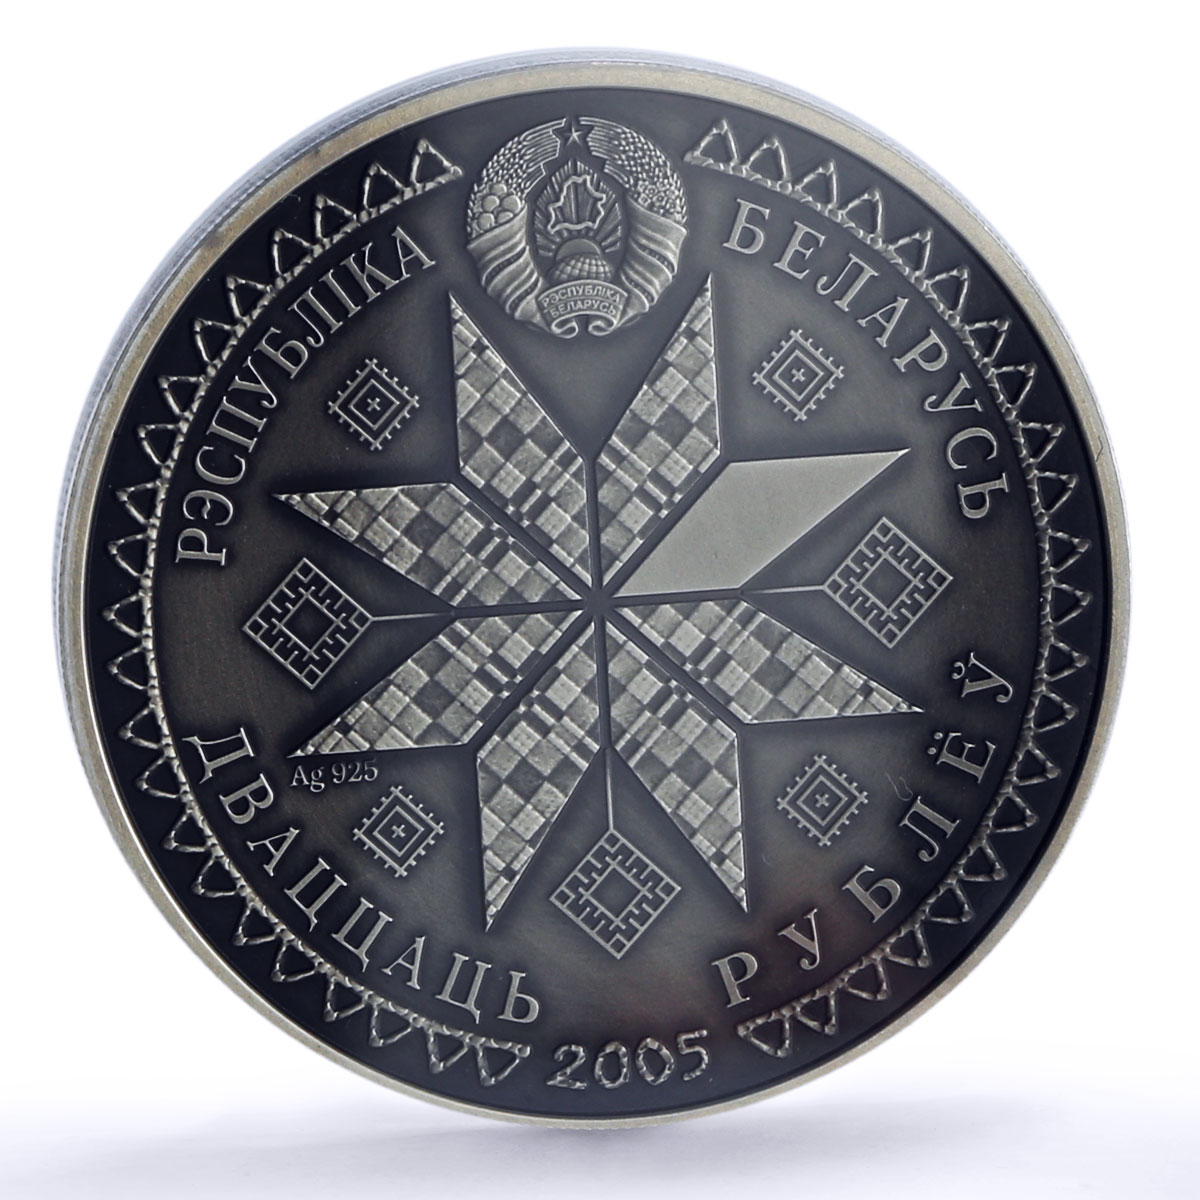 Belarus 20 rubles Velikdzen Easter Egg MS70 PCGS silver coin 2005